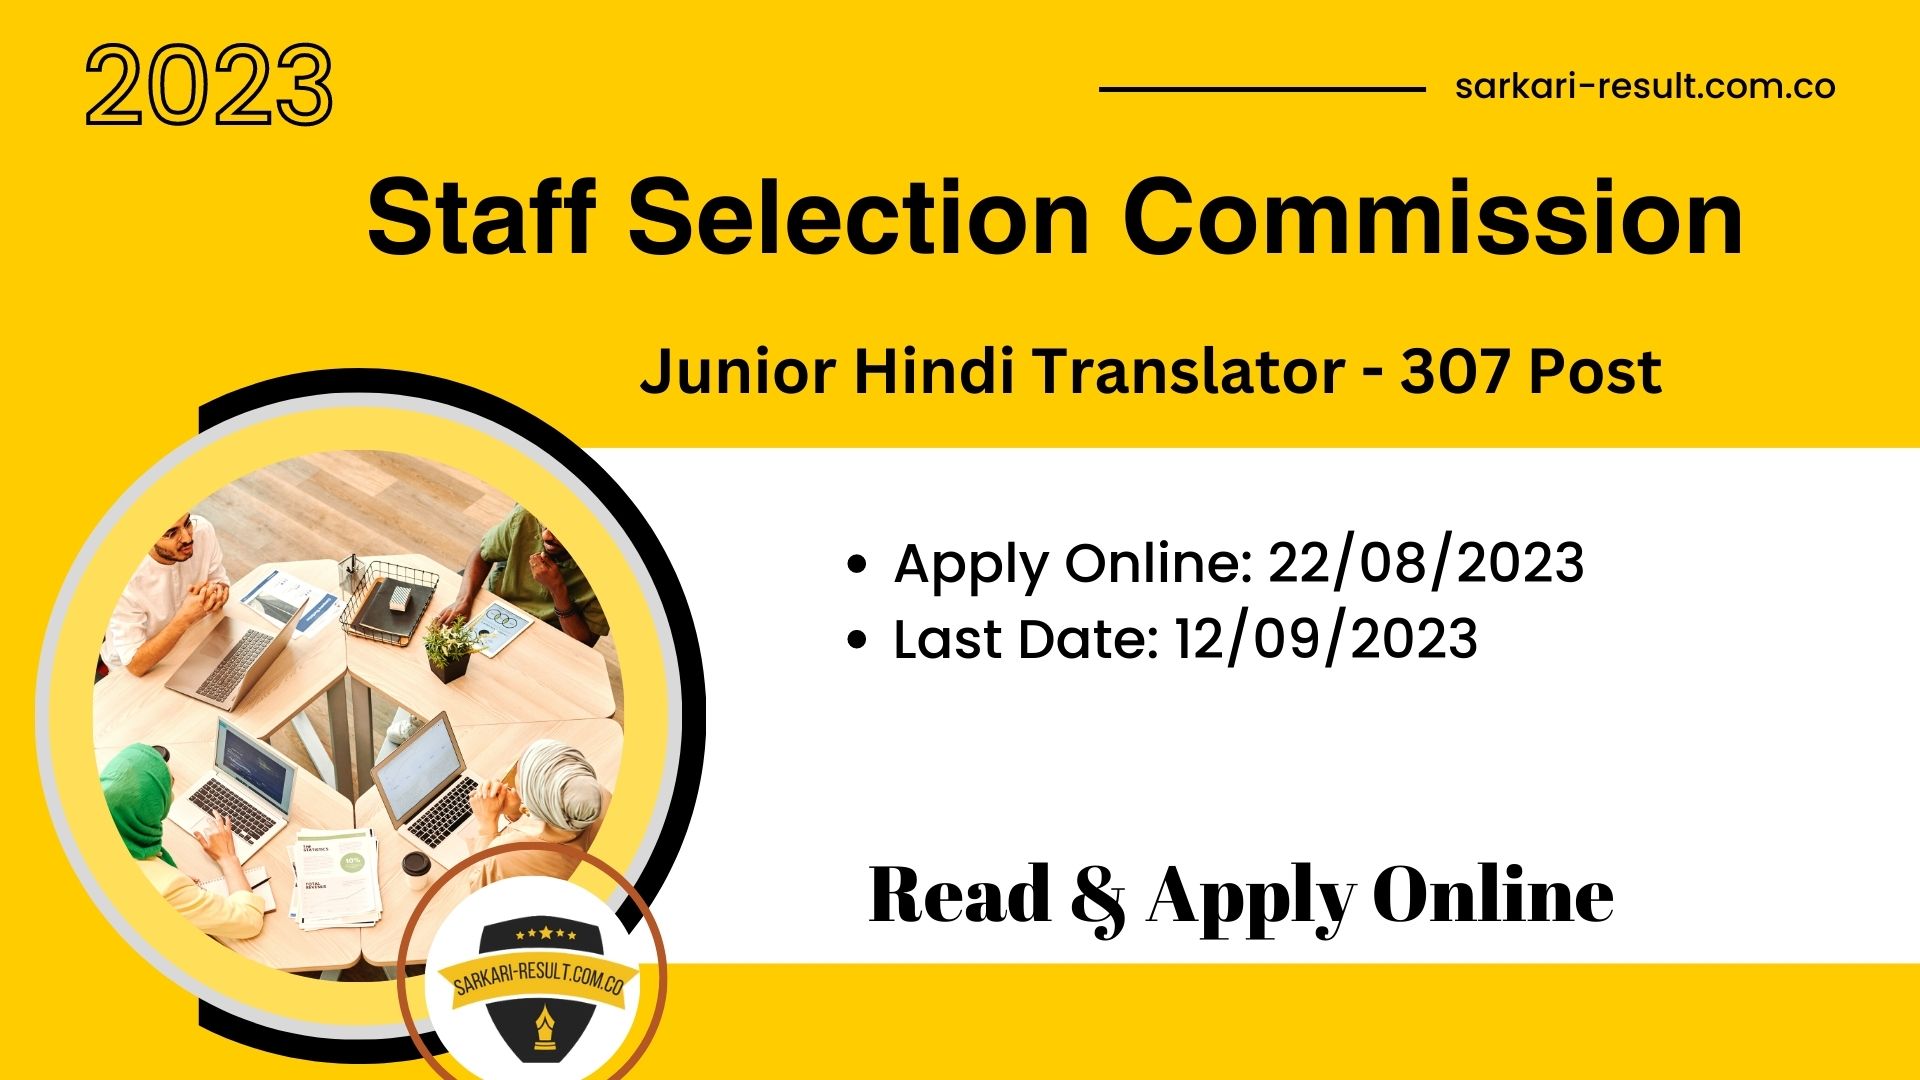 Apply Online SSC Junior Hindi Translator JHT Exam 2023 for 307 Post